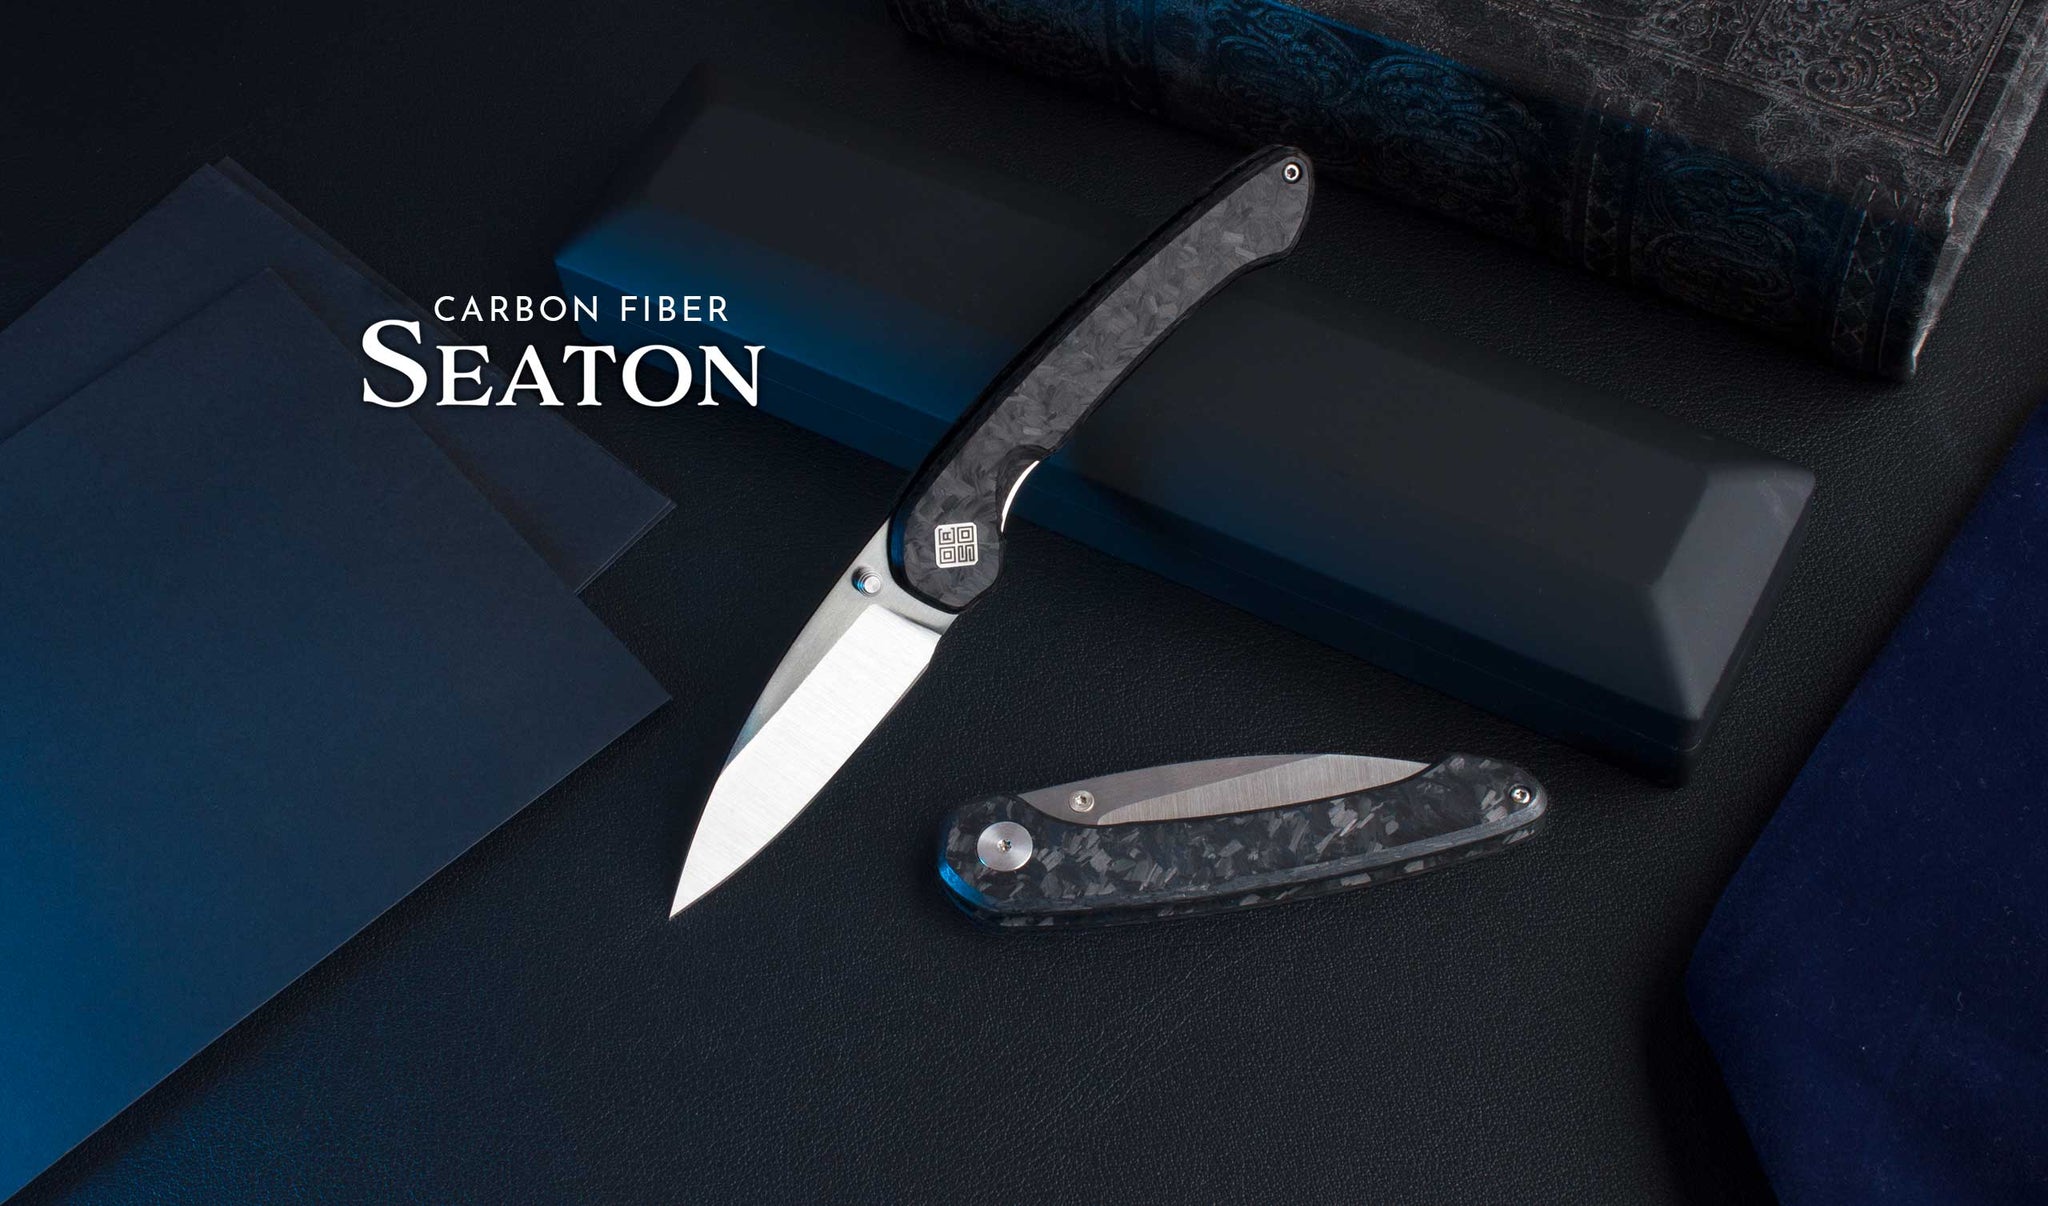 Seaton Gentleman's Knife